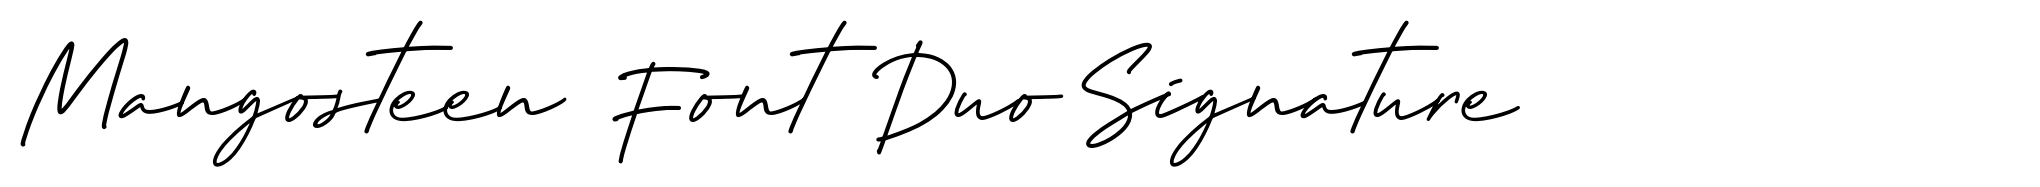 Mangosteen Font Duo Signature image